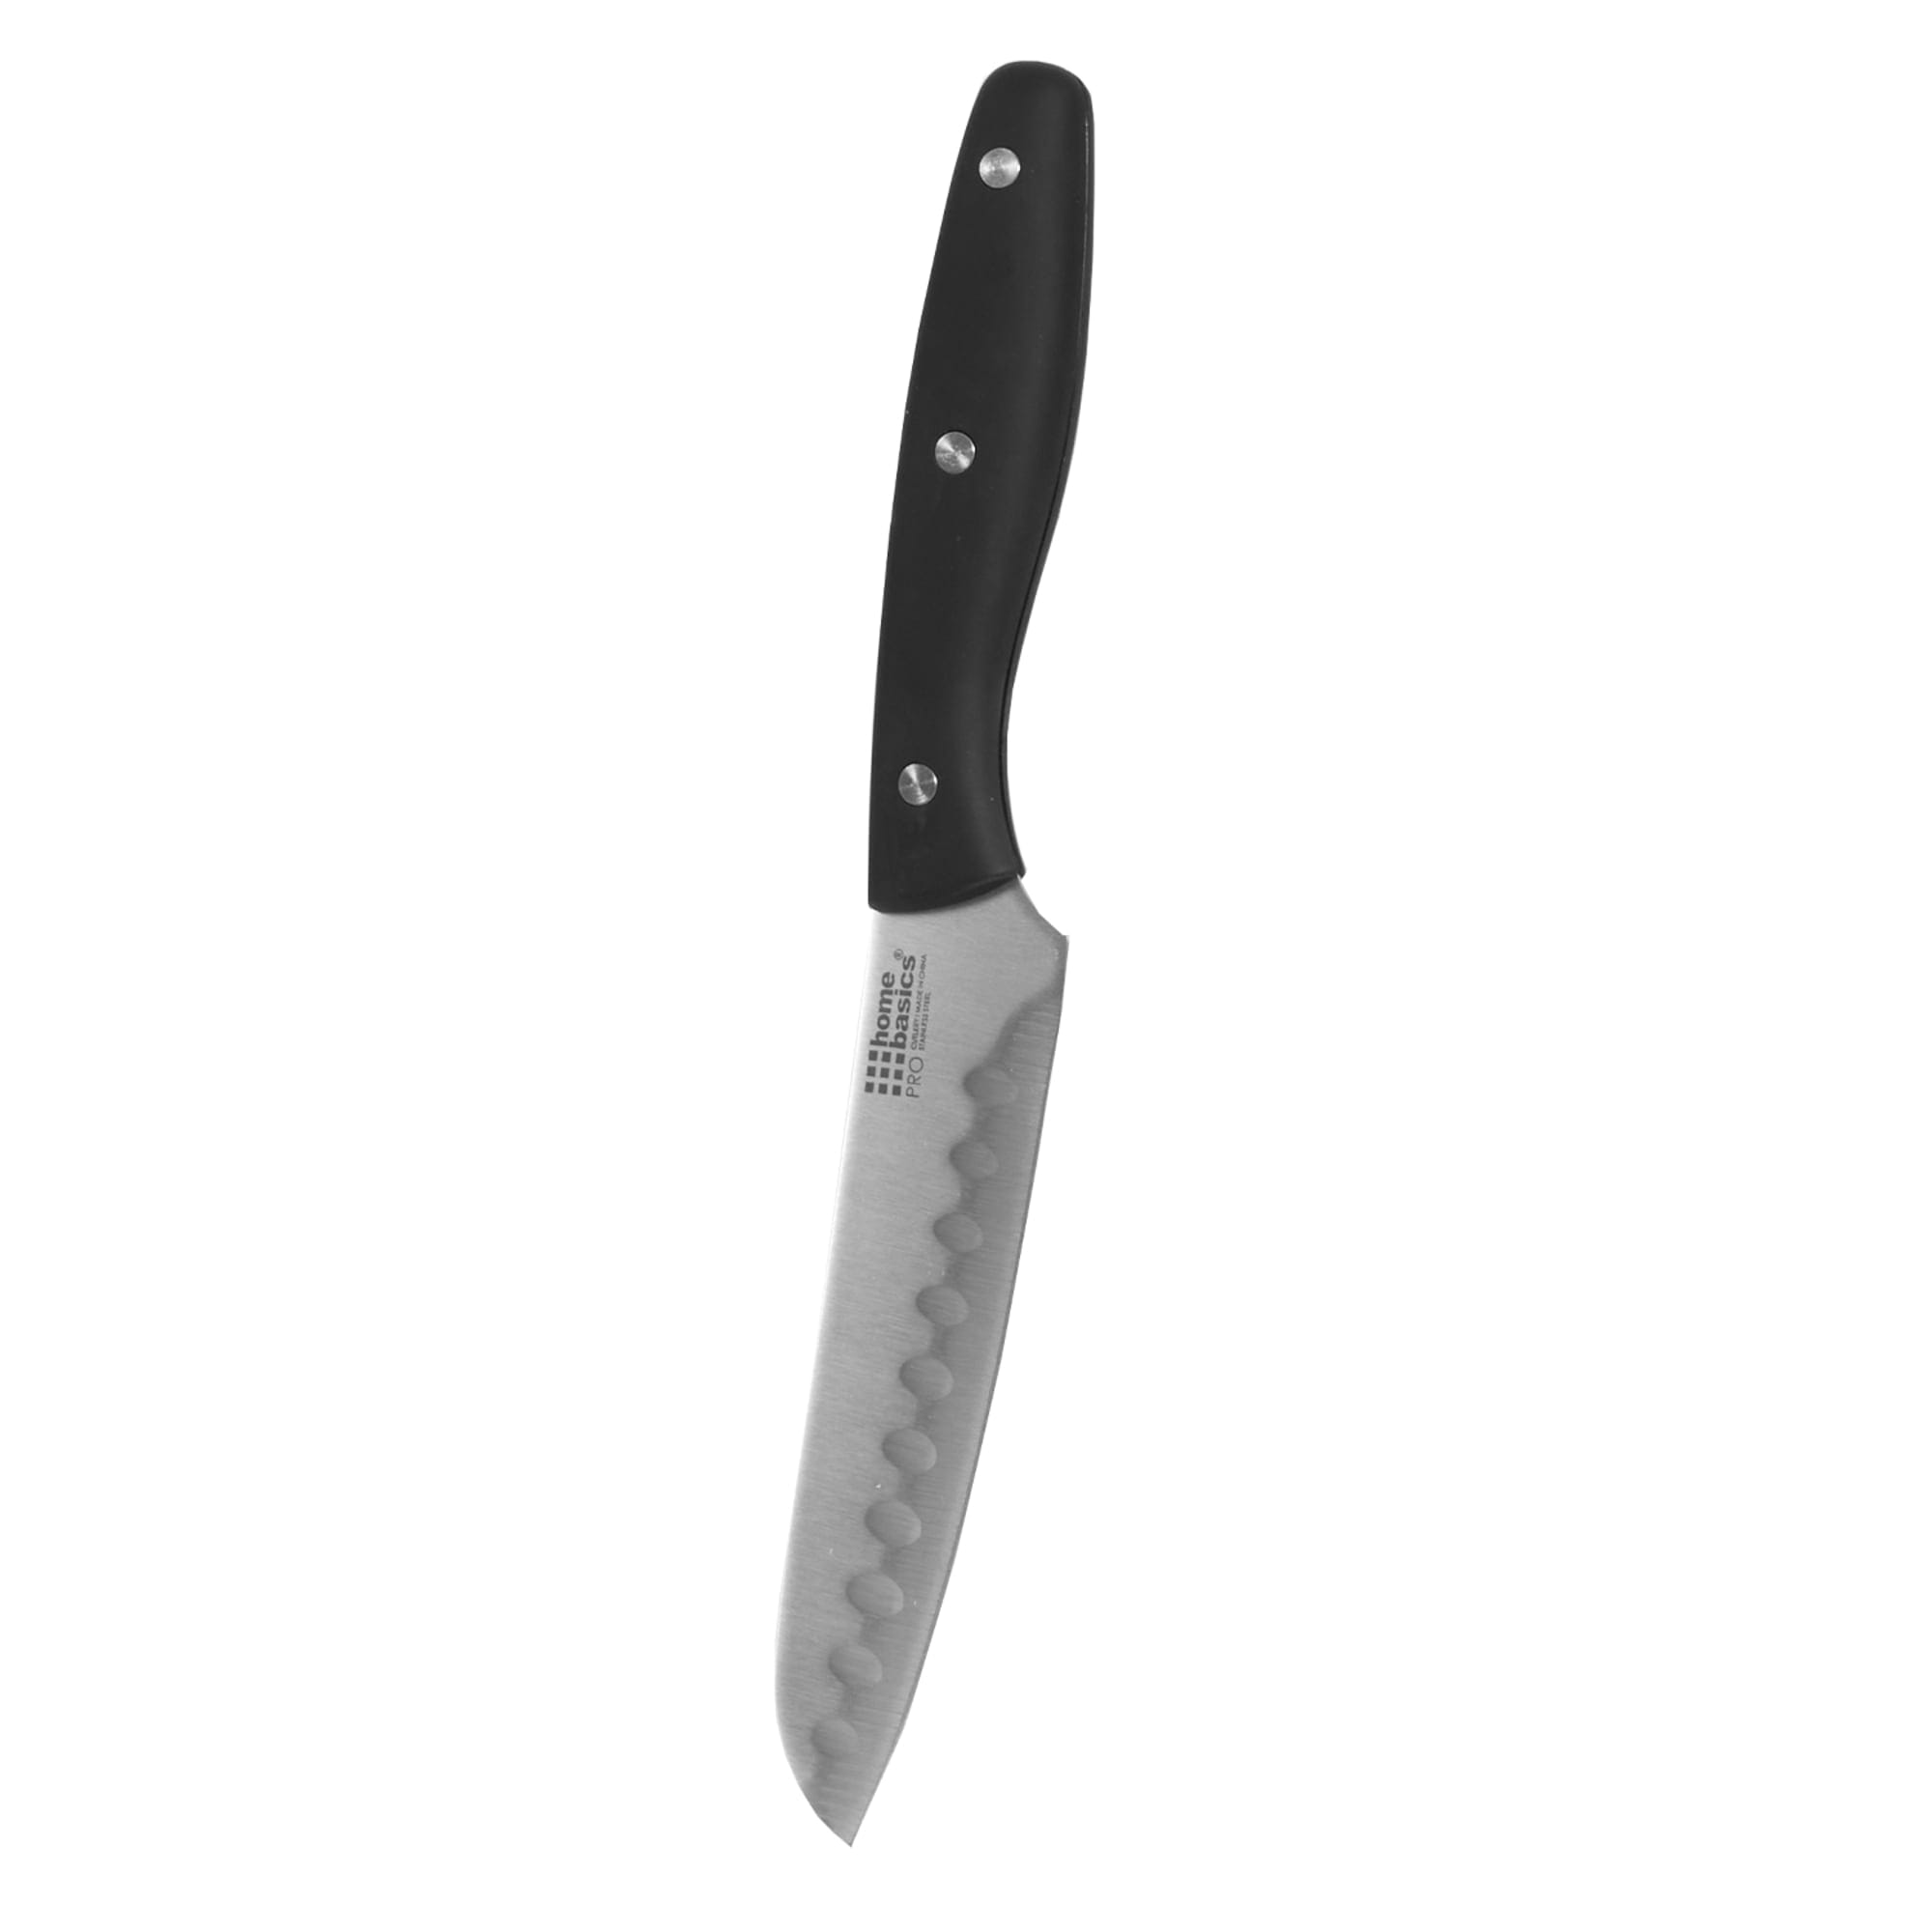 Home Basics 5" Santoku Knife $2.50 EACH, CASE PACK OF 24